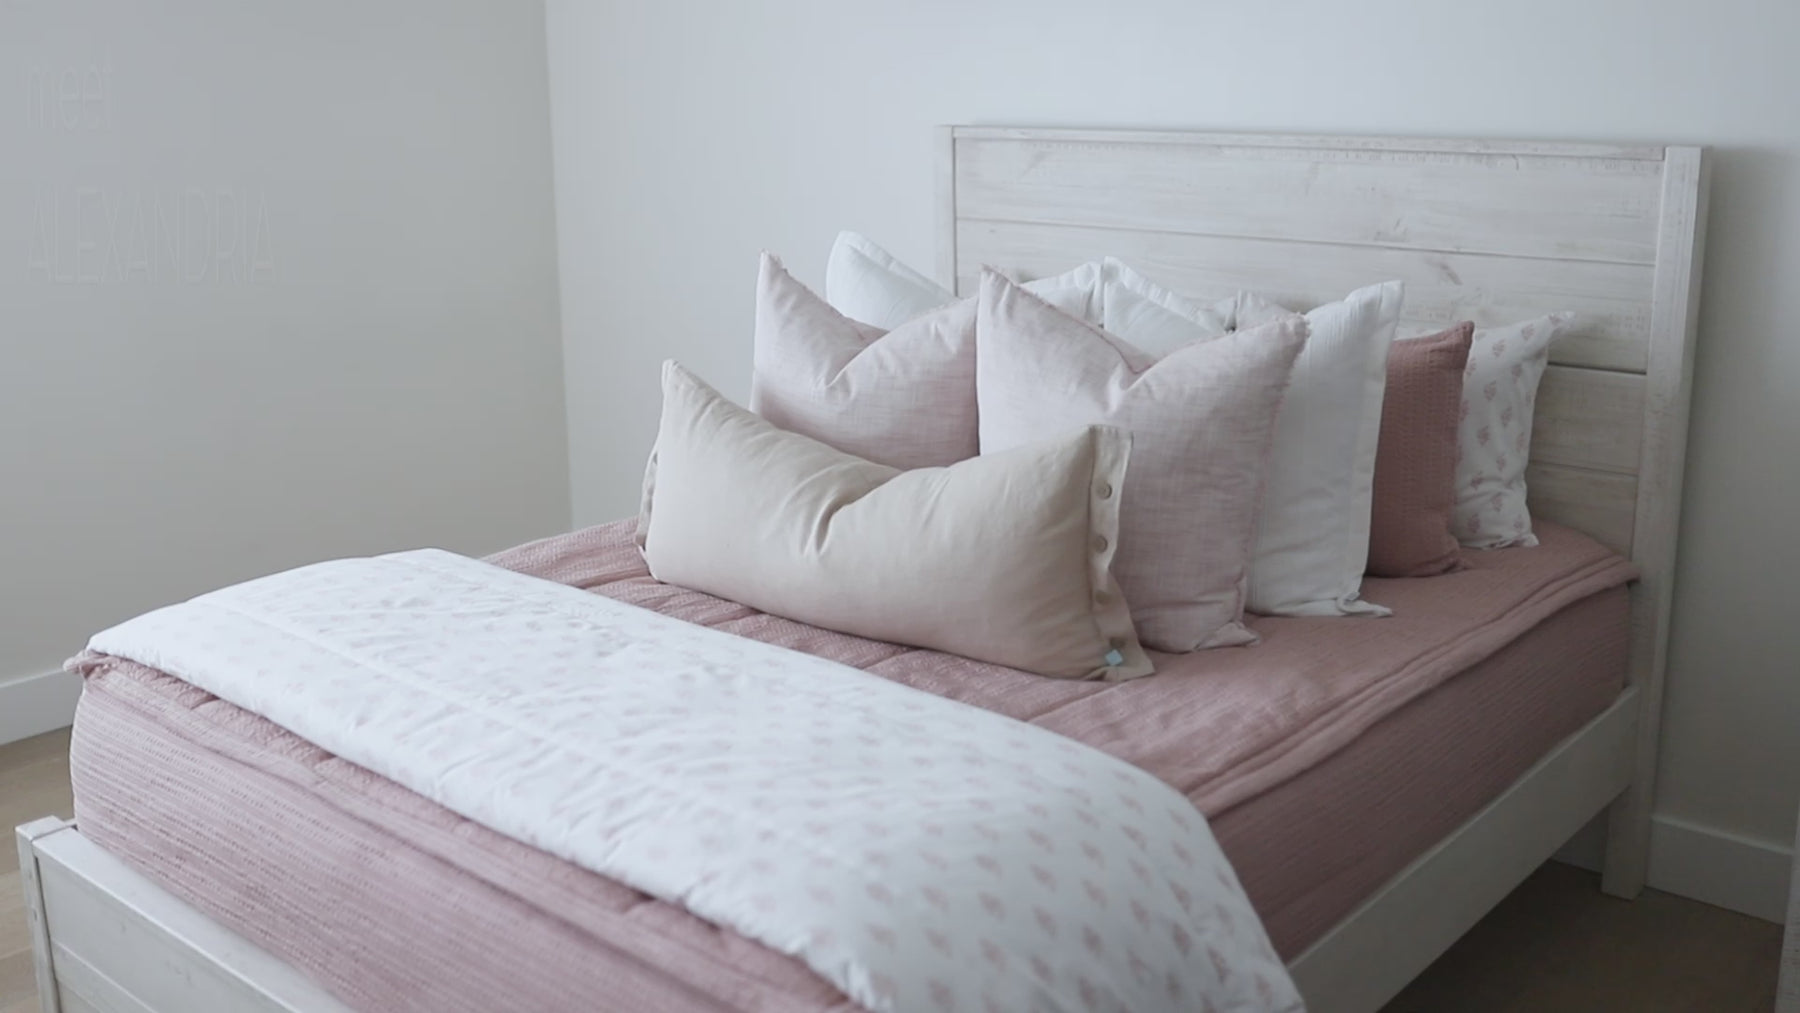 Designer bedspreads and duvet - house_of_famous26